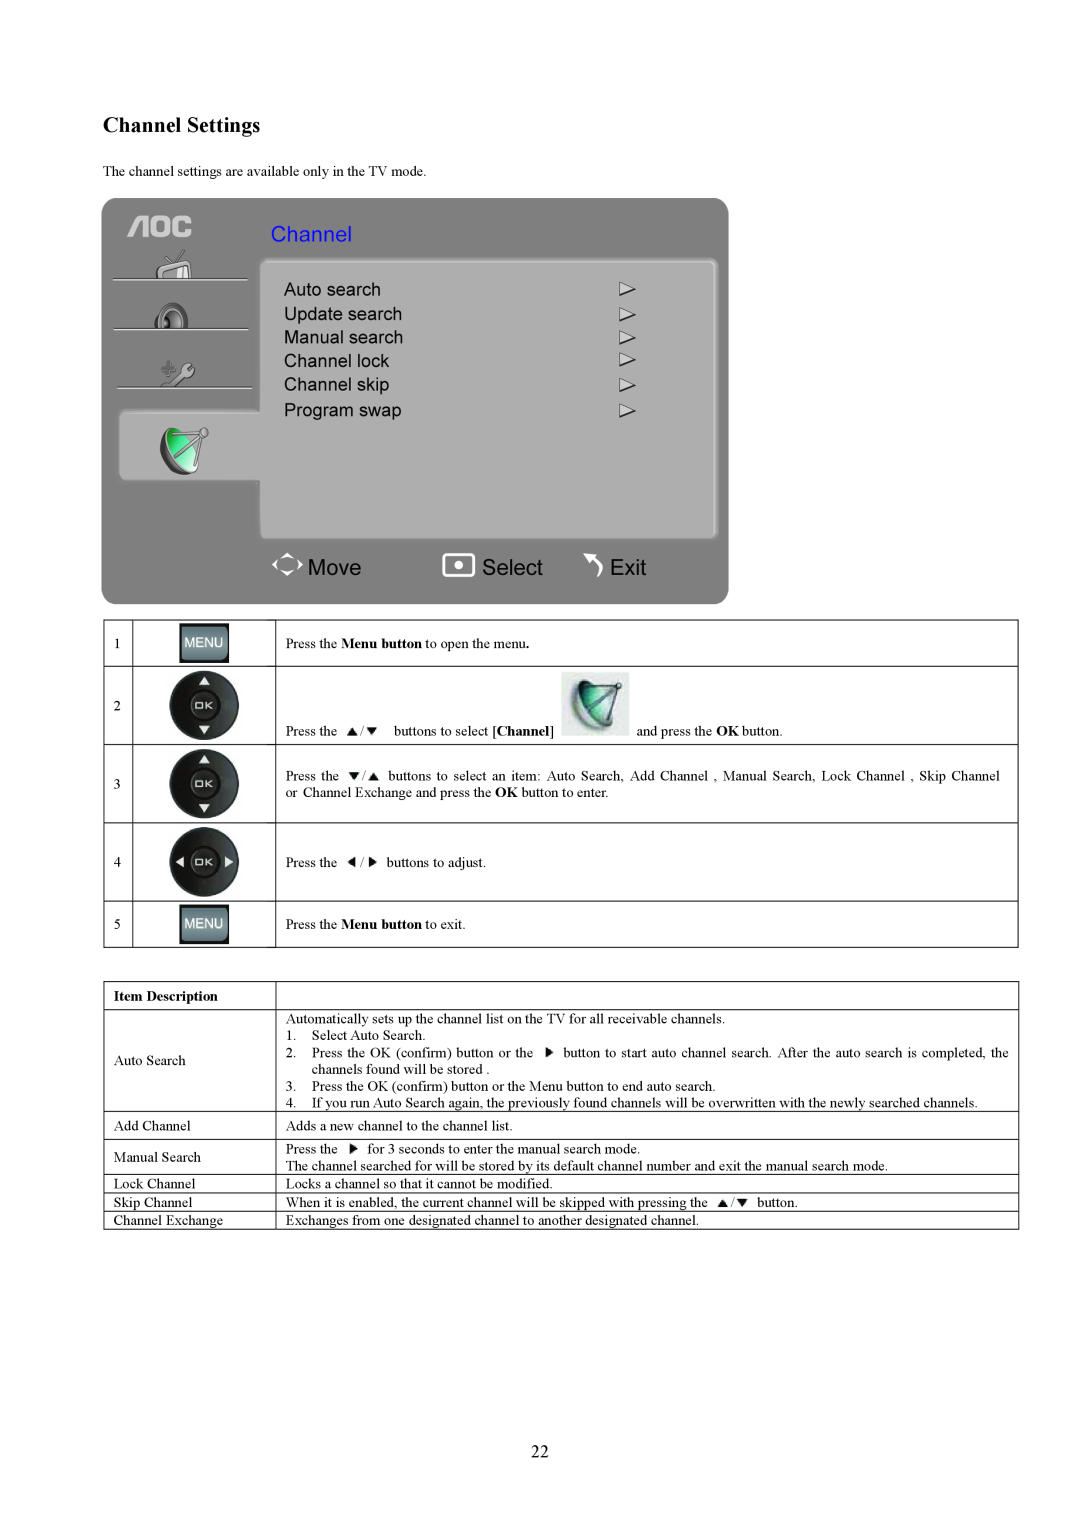 AOC T2442E, T2242WE manual Channel Settings, Item Description, and press the OK button 